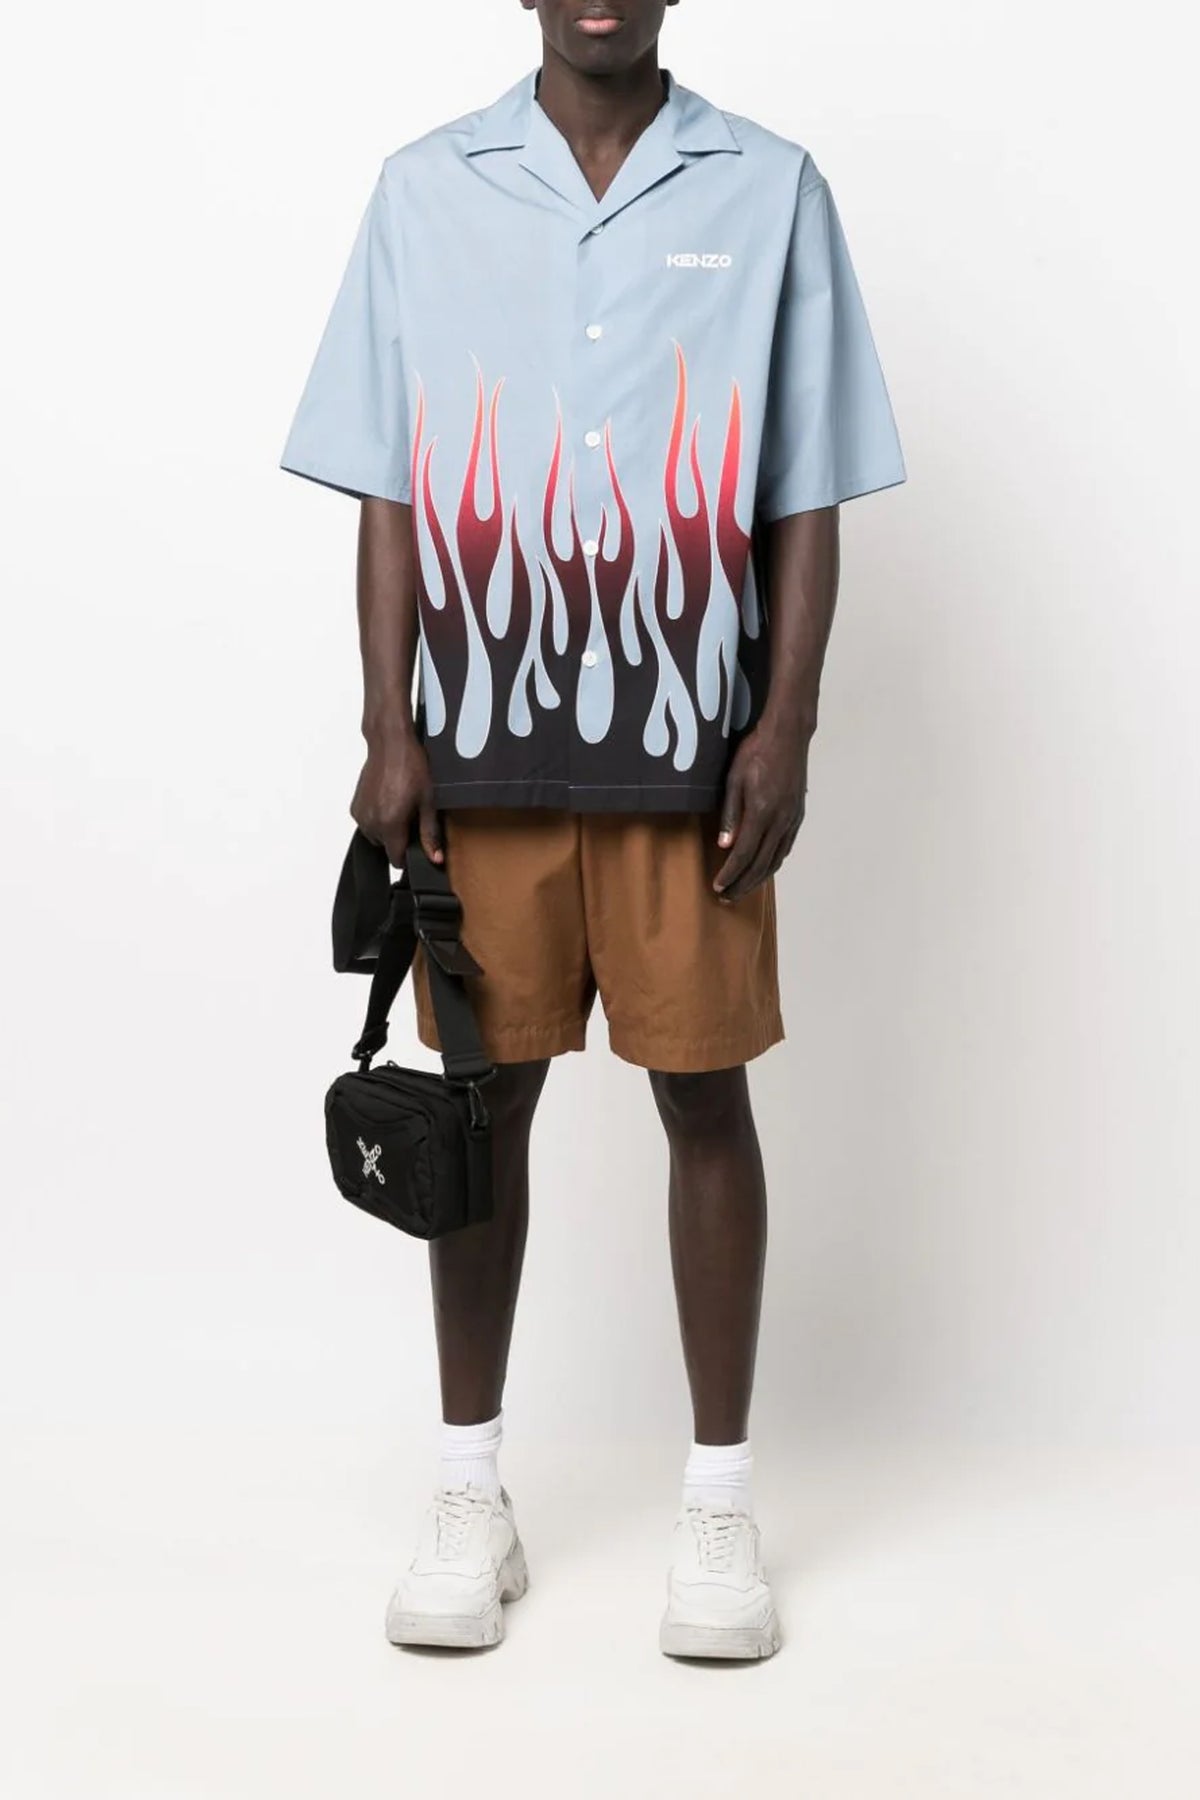 Kenzo flame-print branded short-sleeve shirt